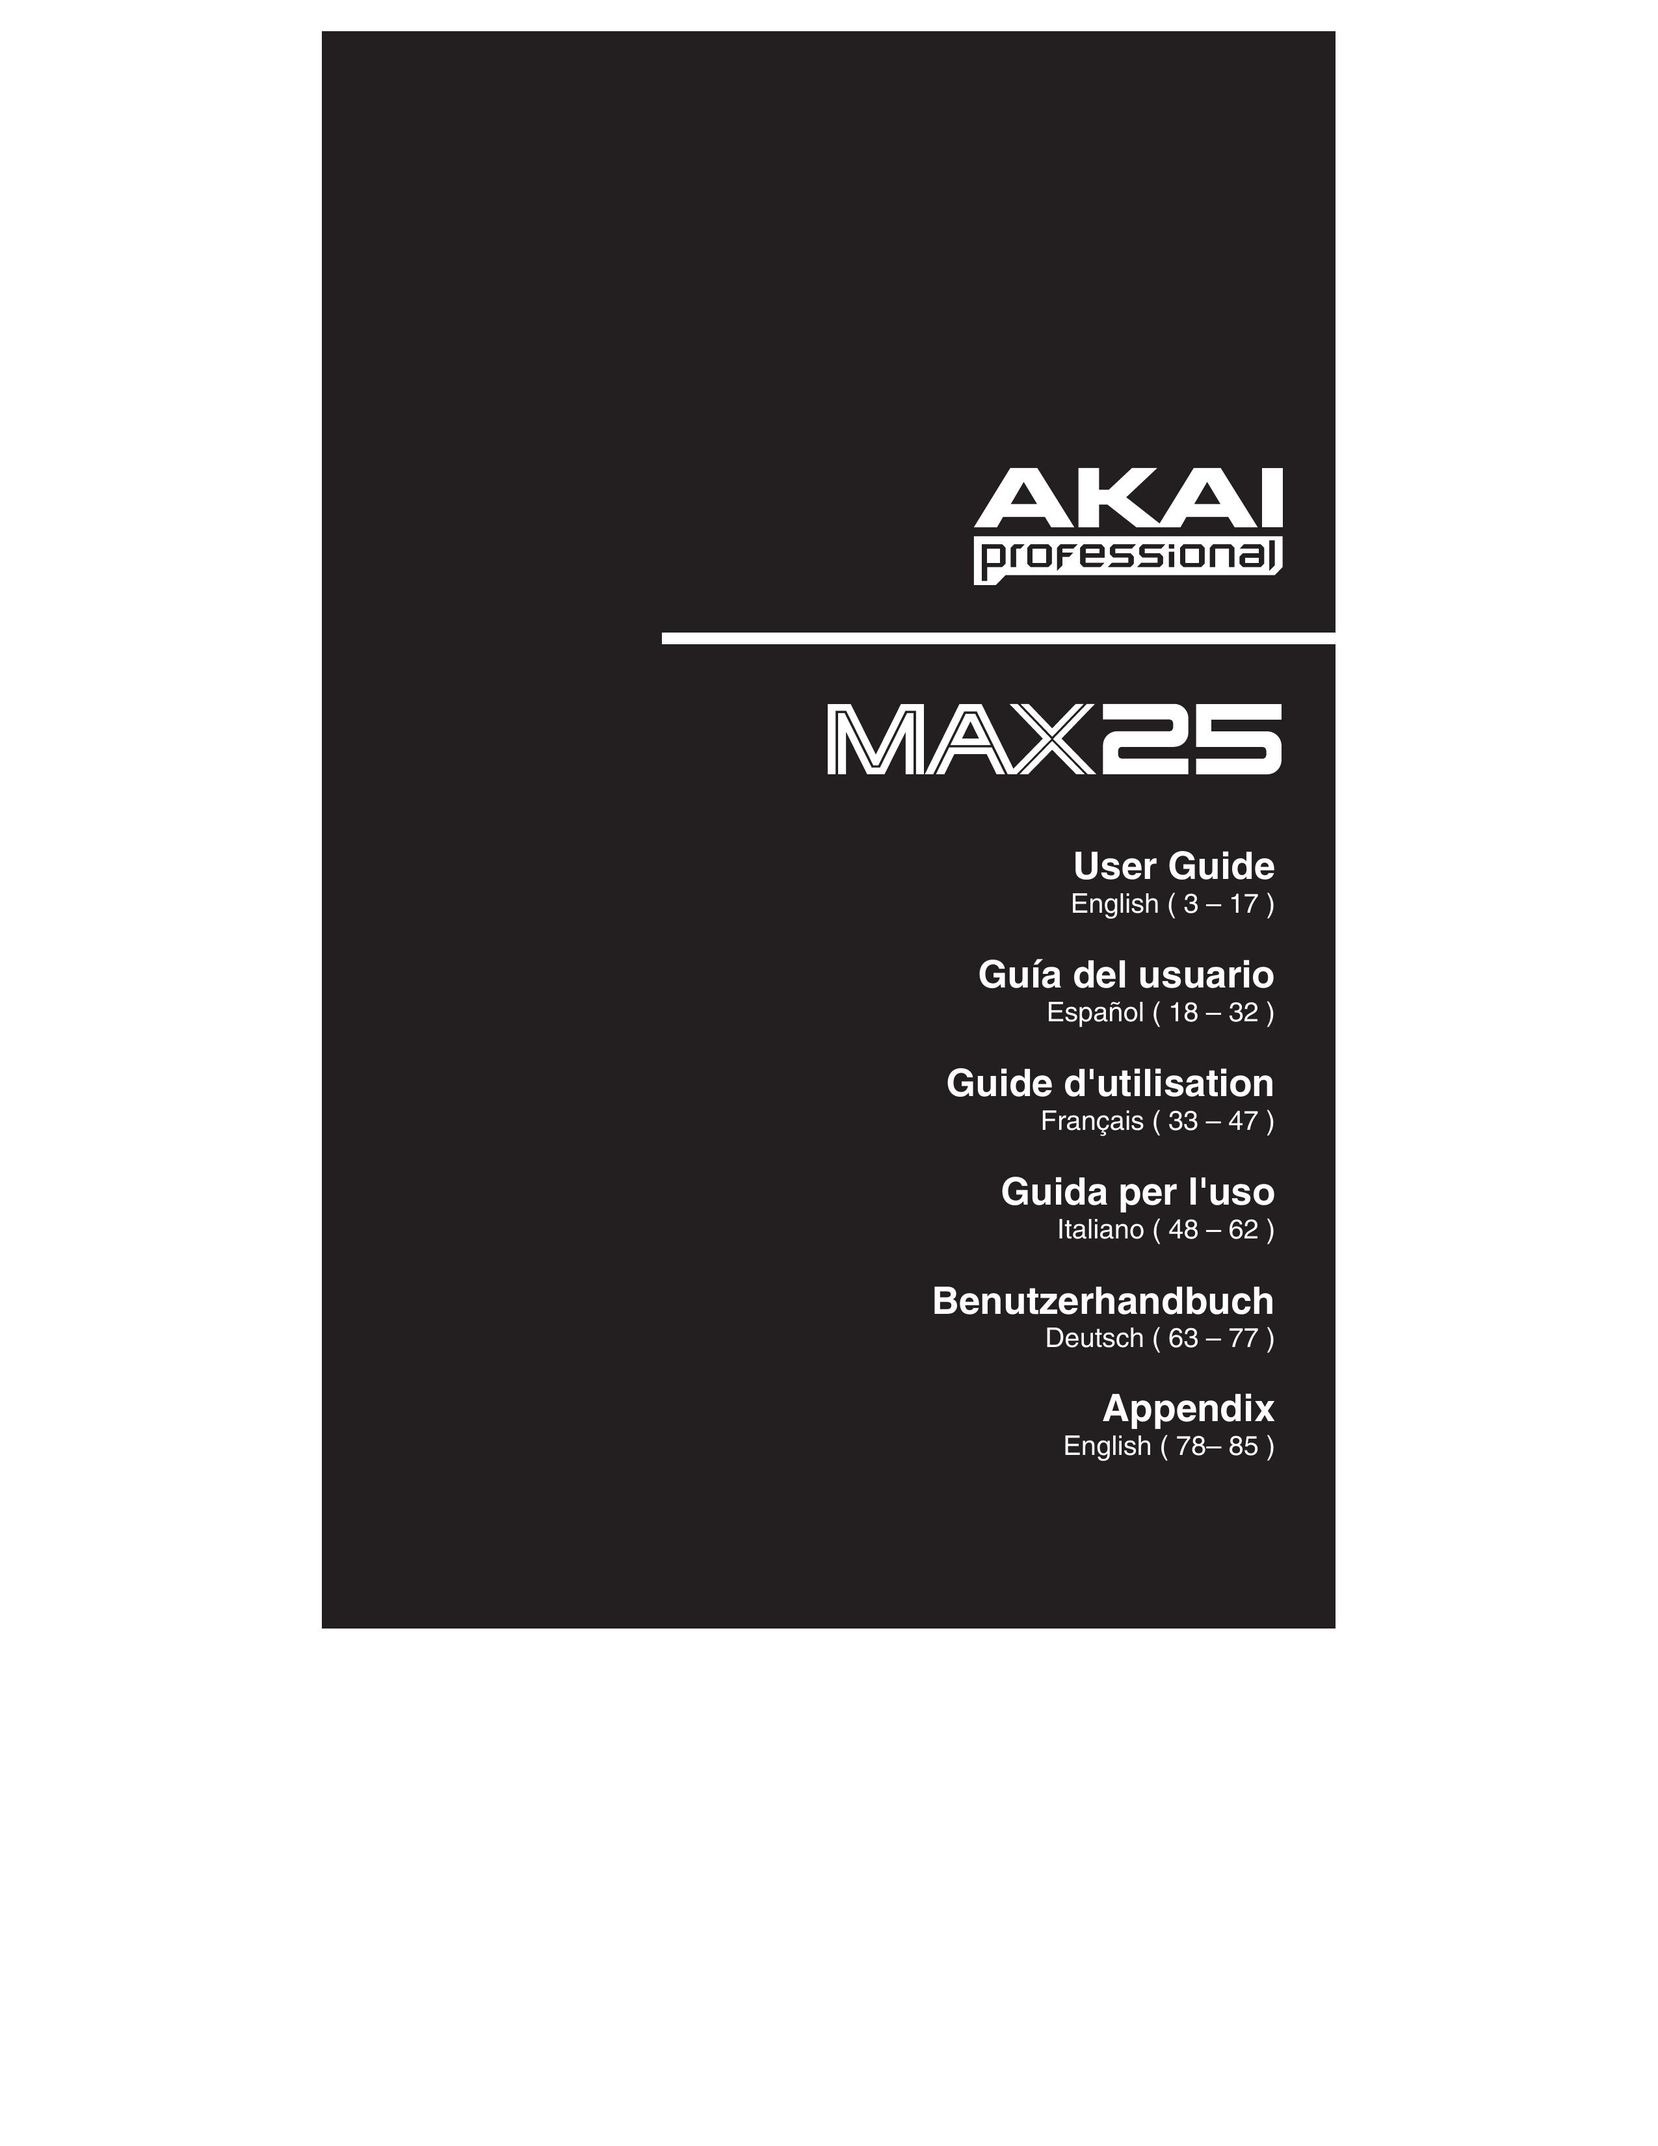 Akai MAX25 Video Game Keyboard User Manual